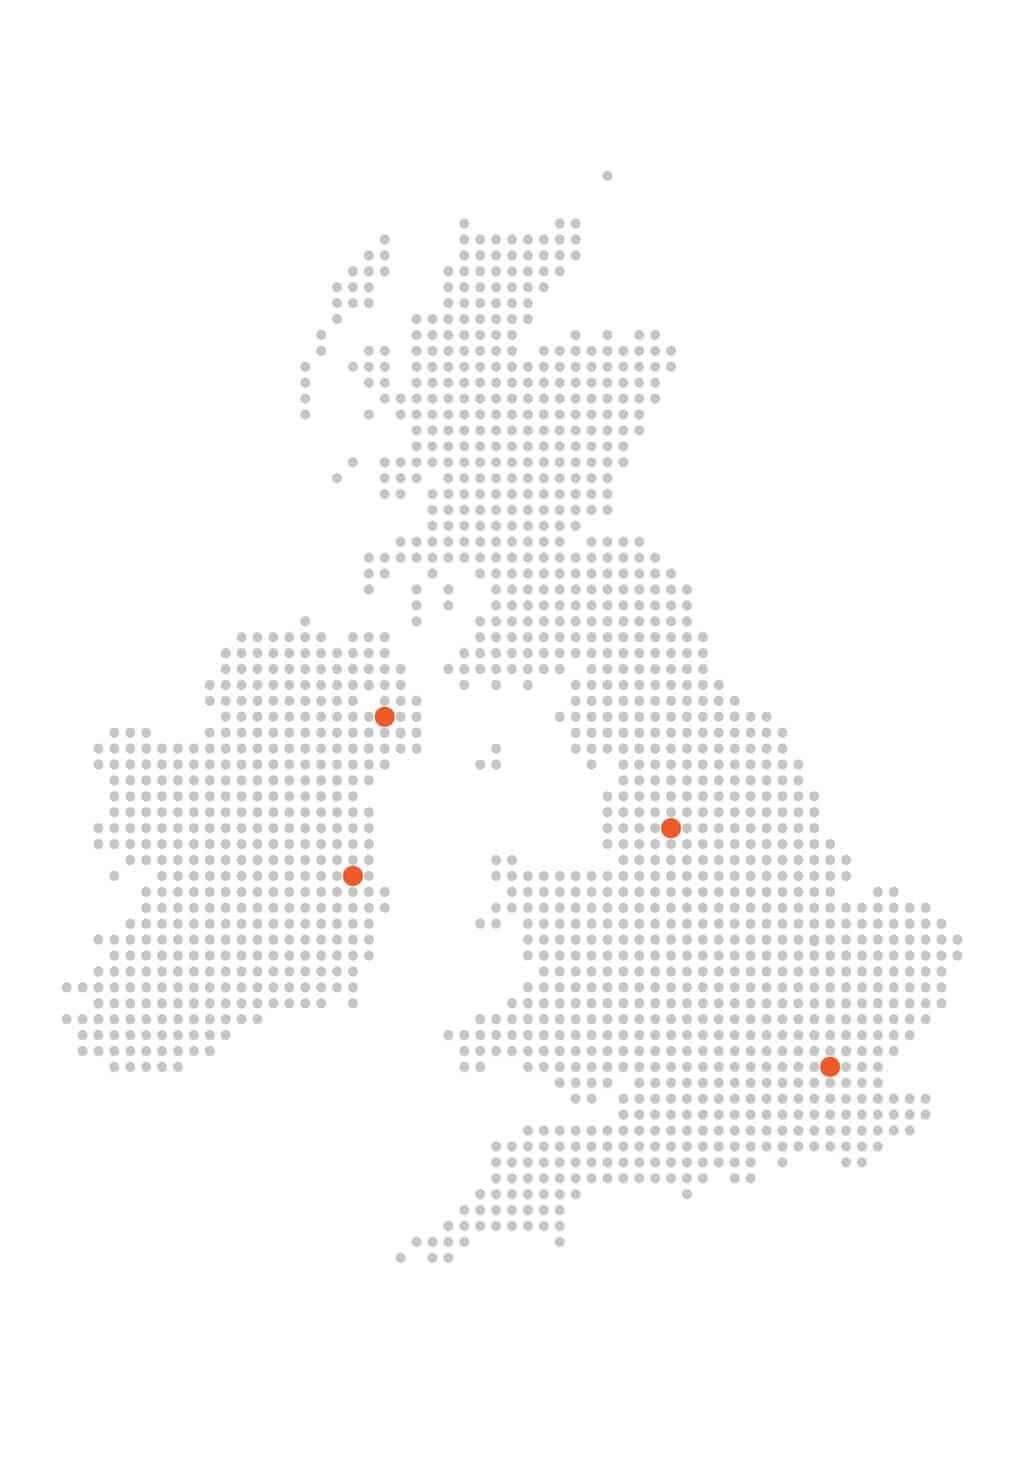 Todd dot map company locations